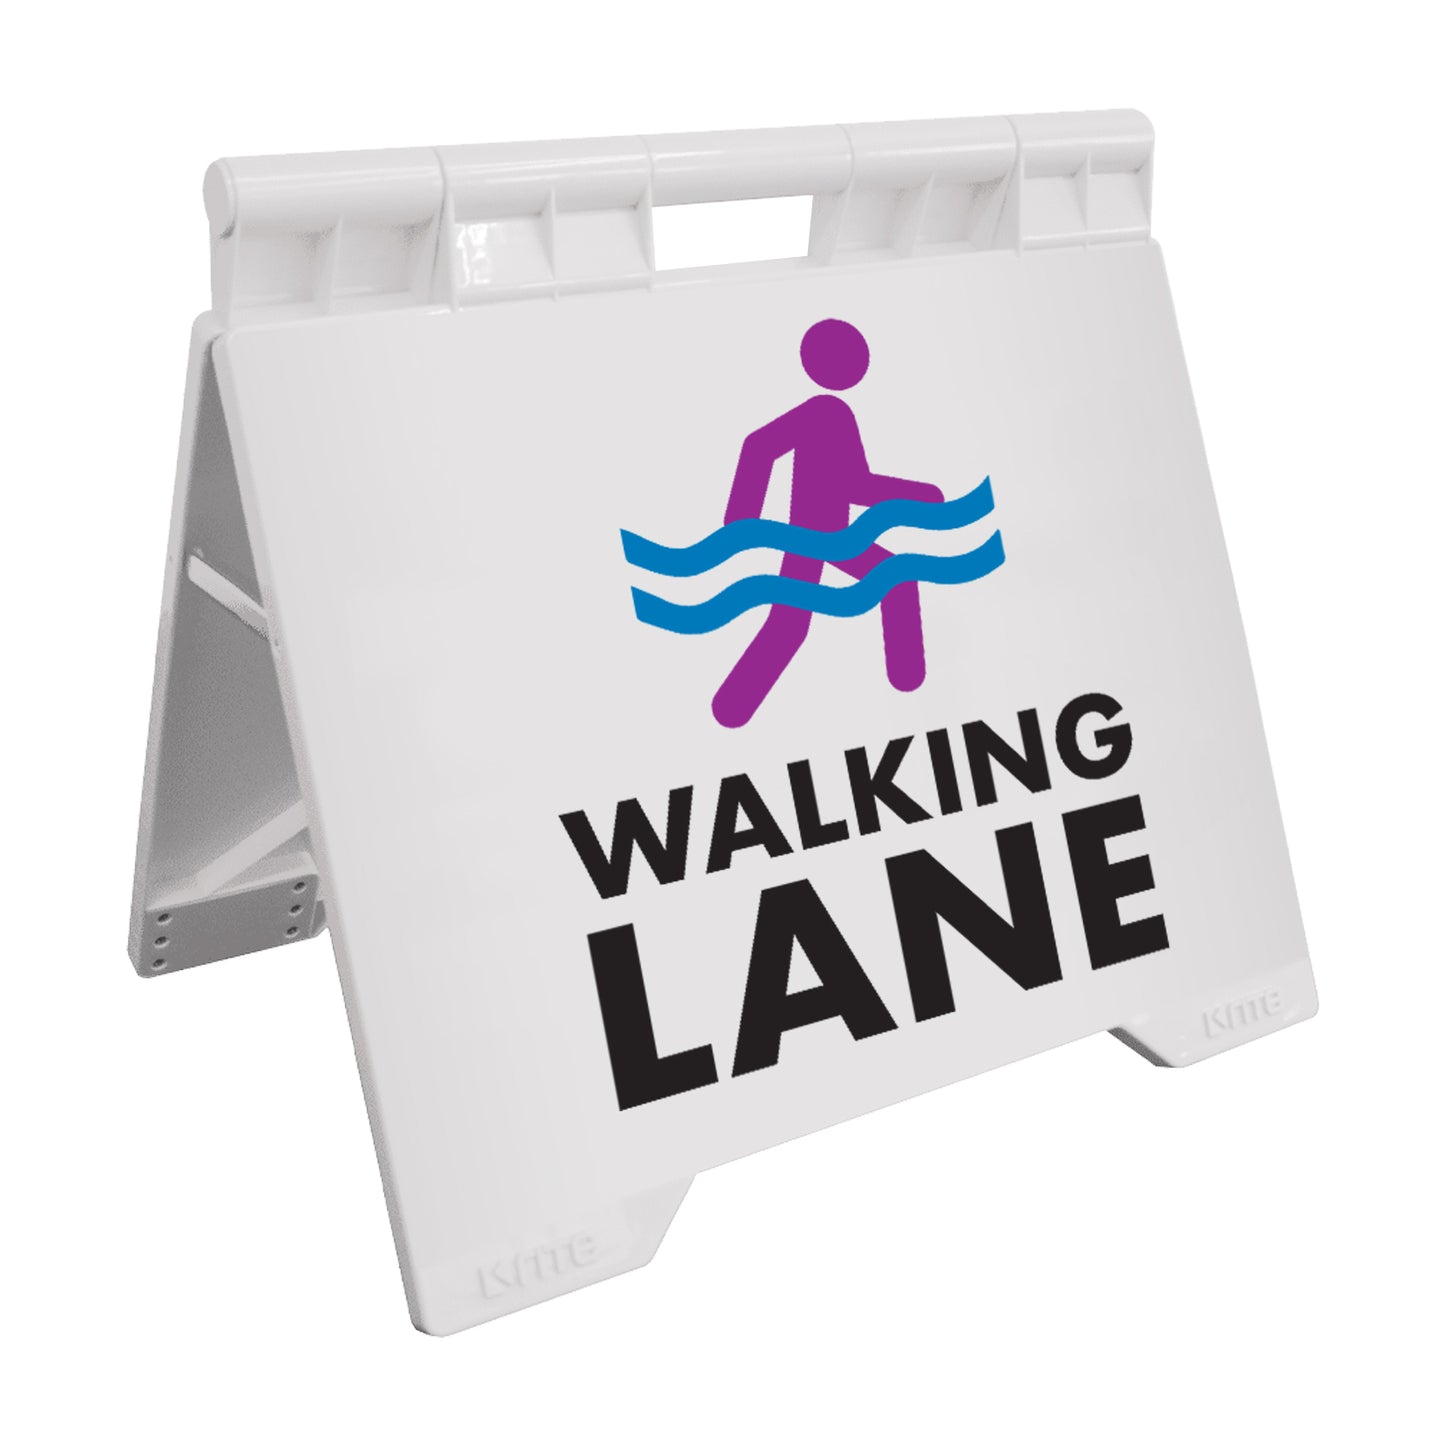 Walking Lane - Evarite A-Frame Sign